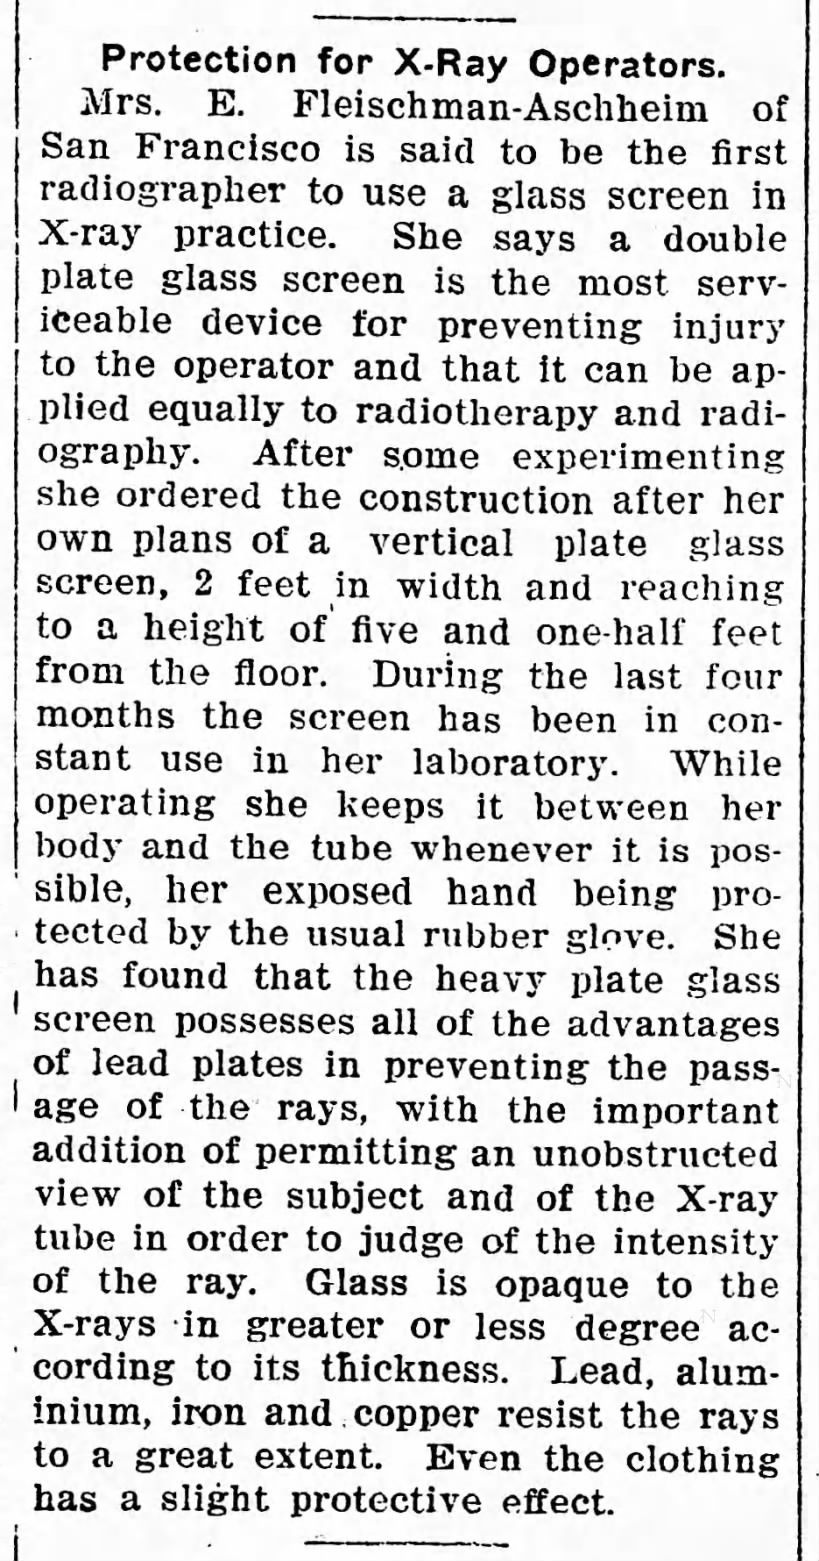 Protection for x-ray operators, Elizabeth Fleischman-Aschheim (1904)